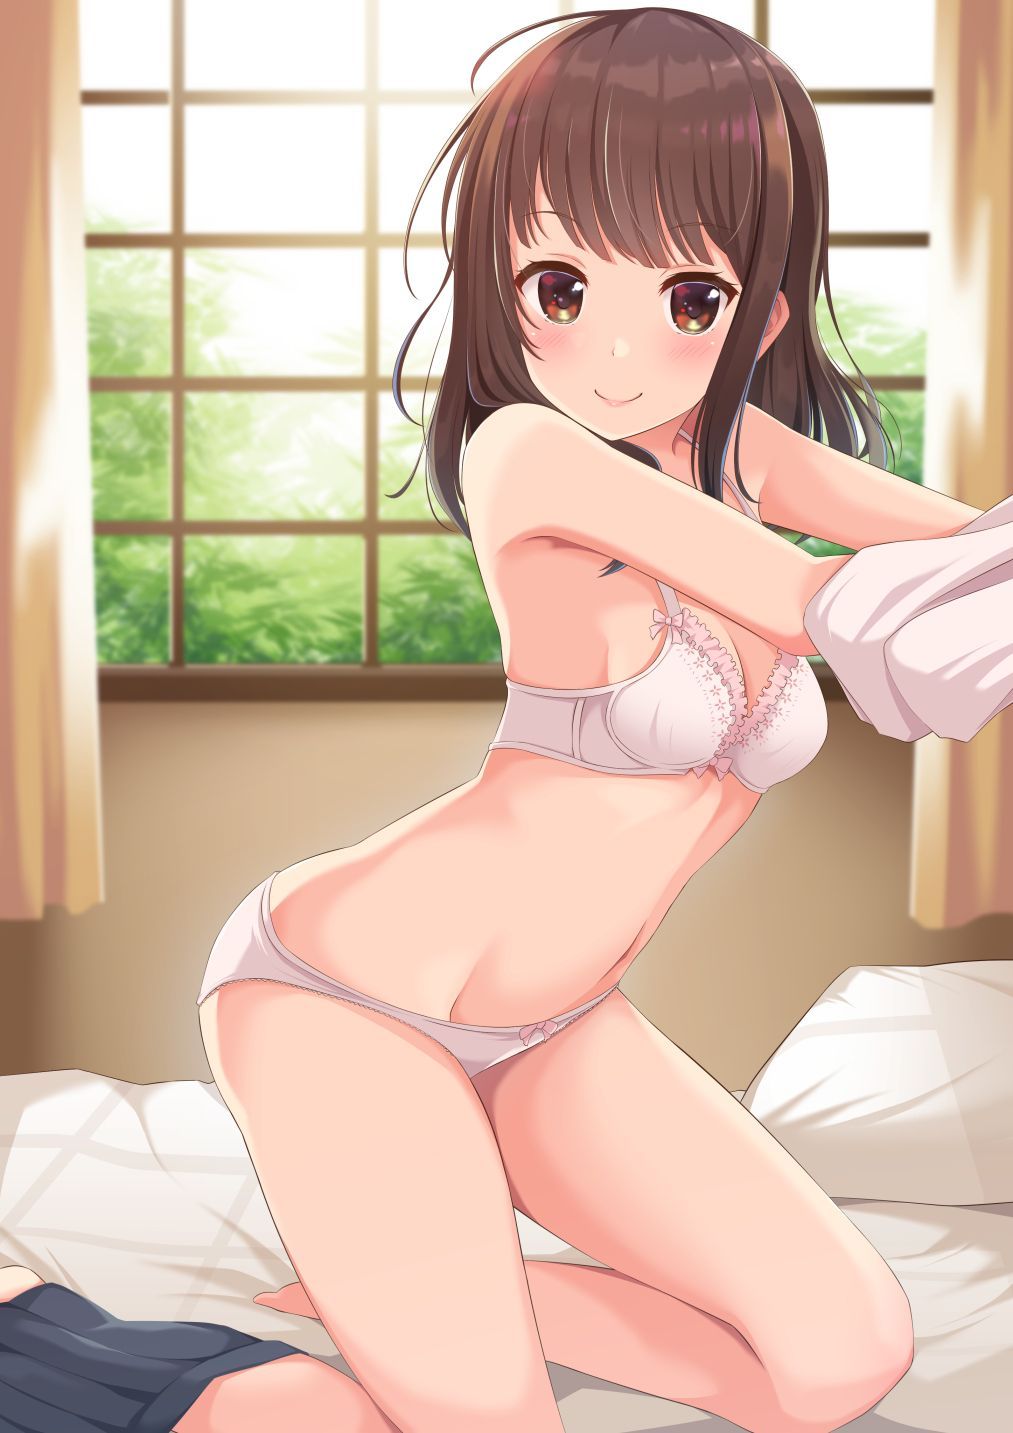 【Erotic Anime Summary】 Erotic image of a creepy girl wearing white pure white underwear 【Secondary erotic】 2